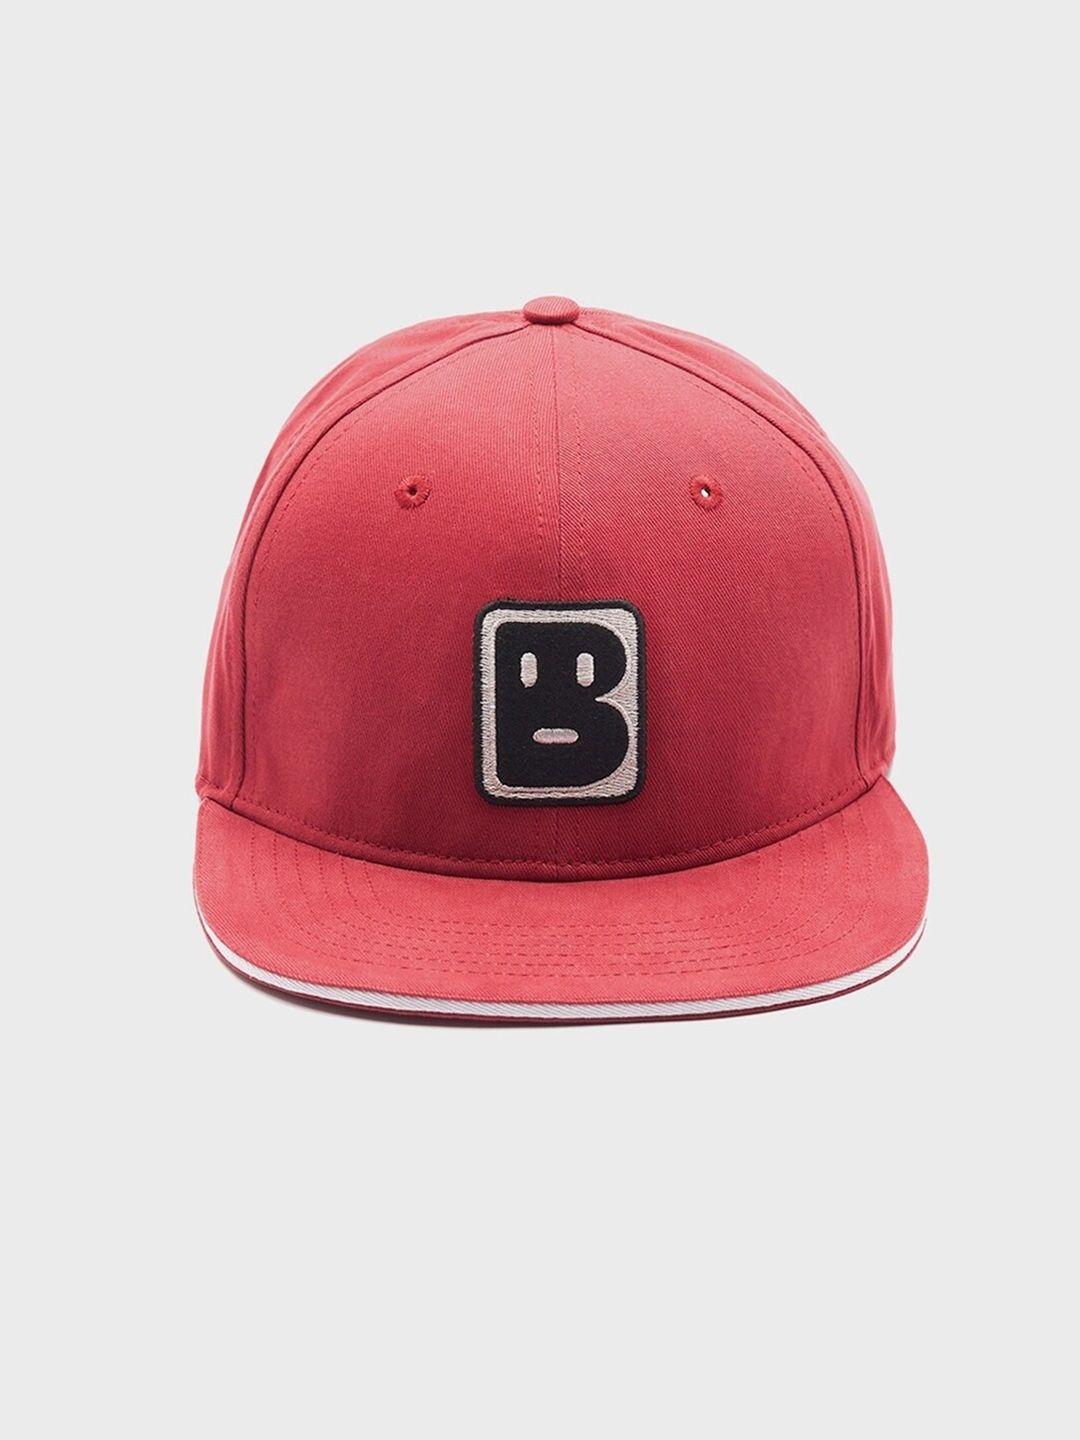 bewakoof unisex embroidered baseball cap